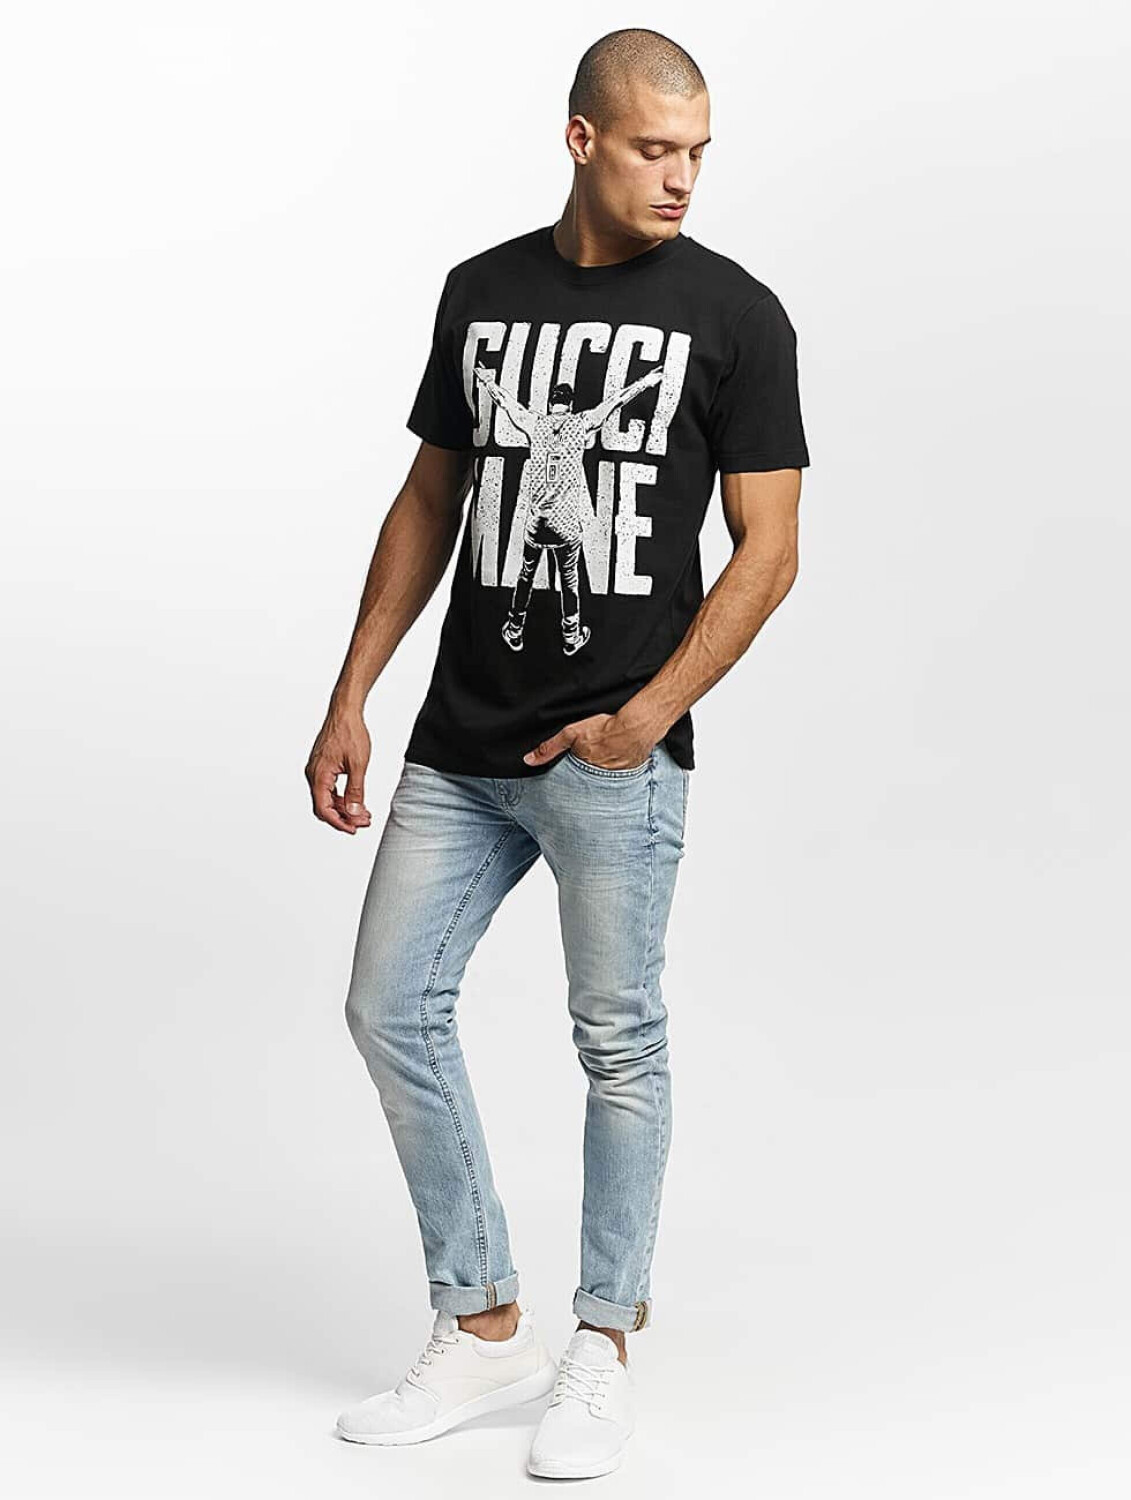 Mane 15,99 black T-Shirt € ab Merchcode bei Gucci (MC104BLK) Victory Preisvergleich |